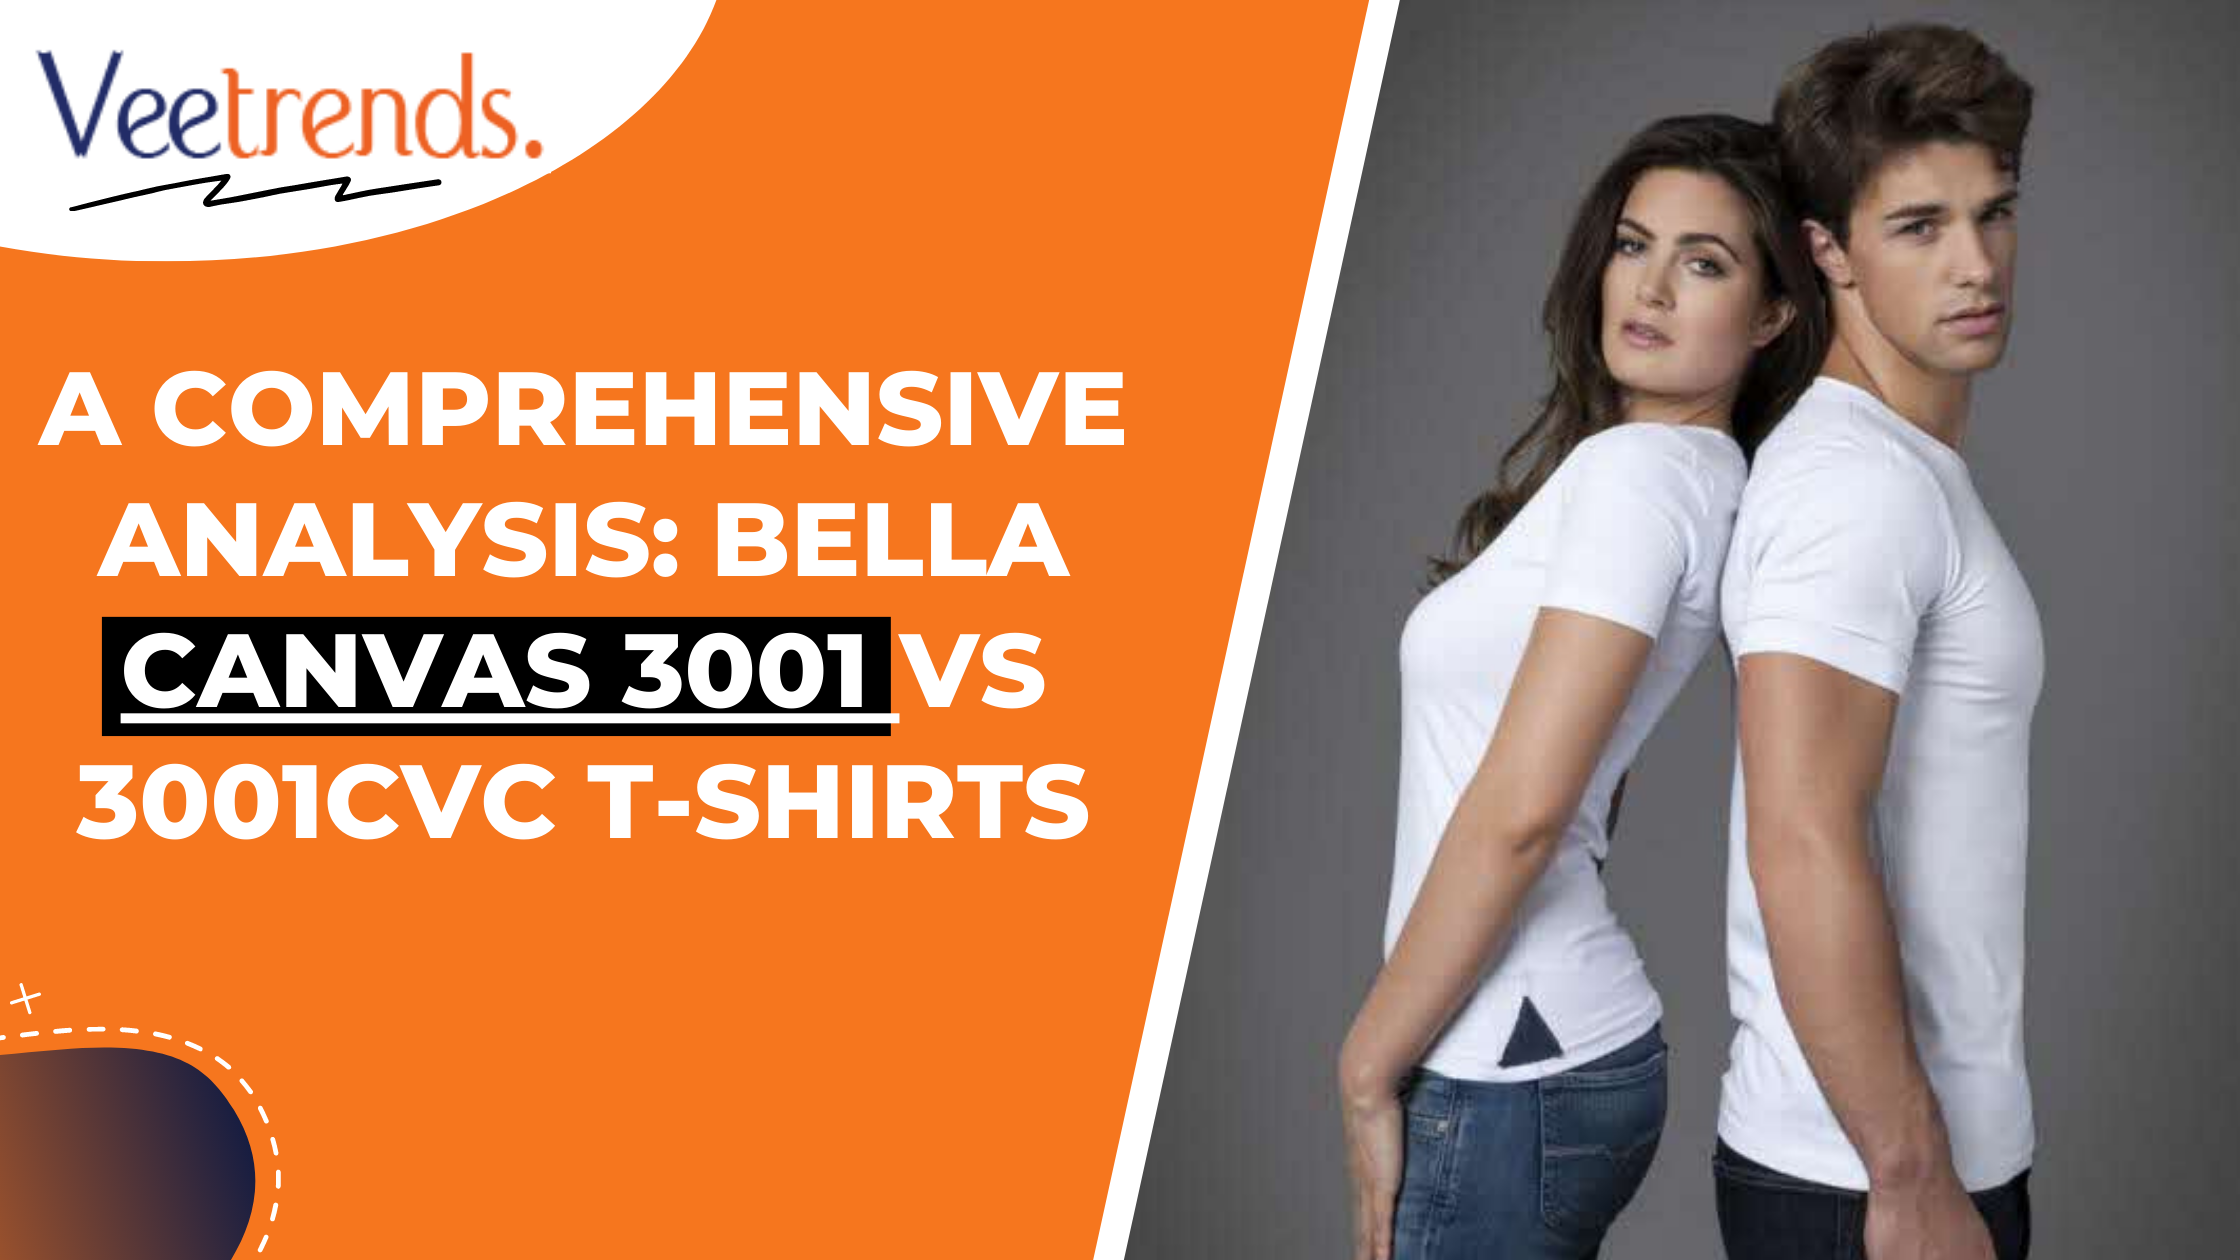 B6050 Bella + Canvas Ladies' Jersey Short-Sleeve Ringer T-Shirt